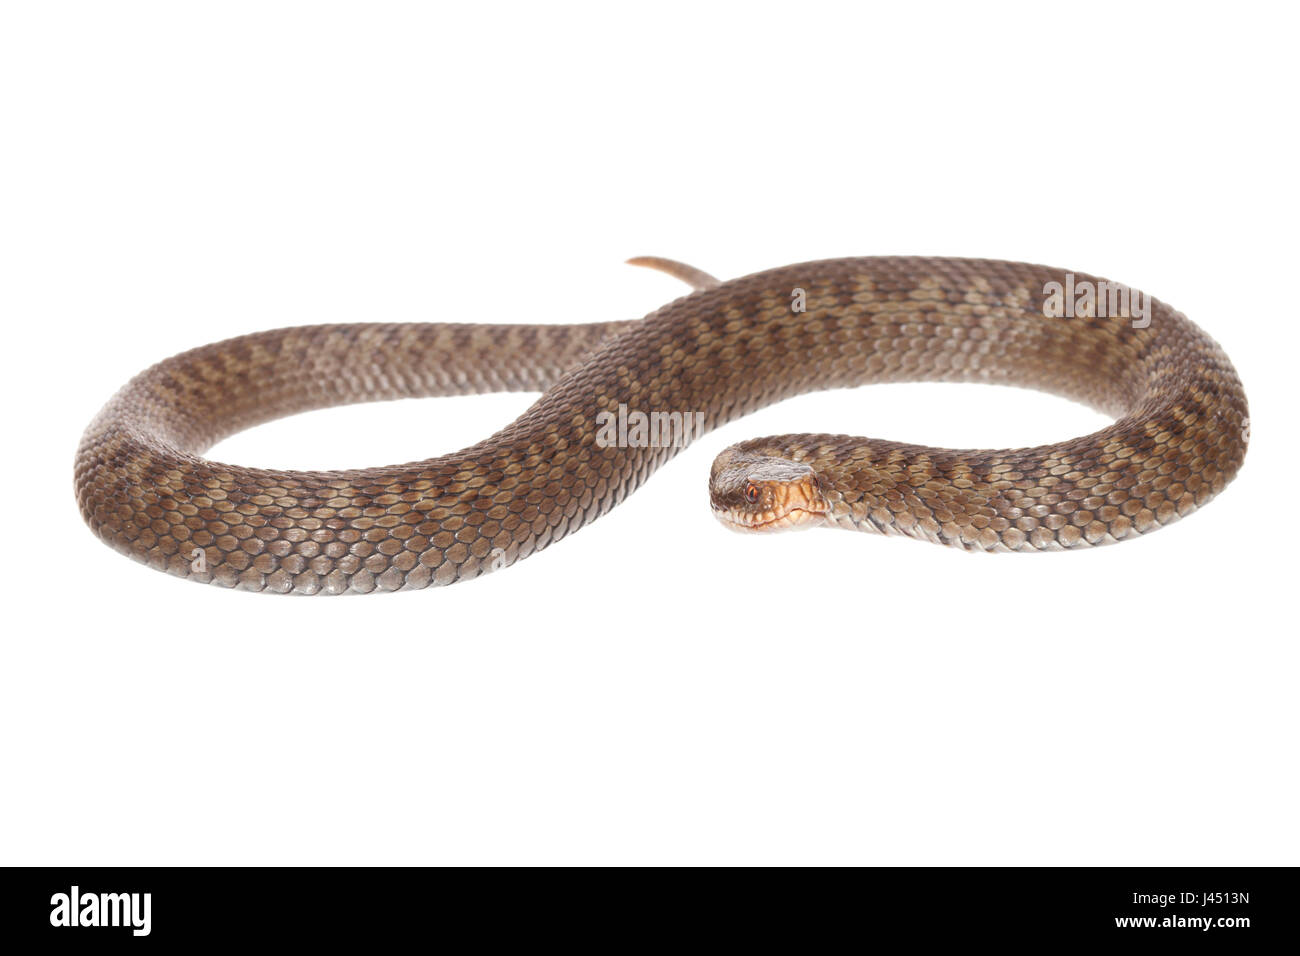 photo of a female comon viper against a white background Stock Photo